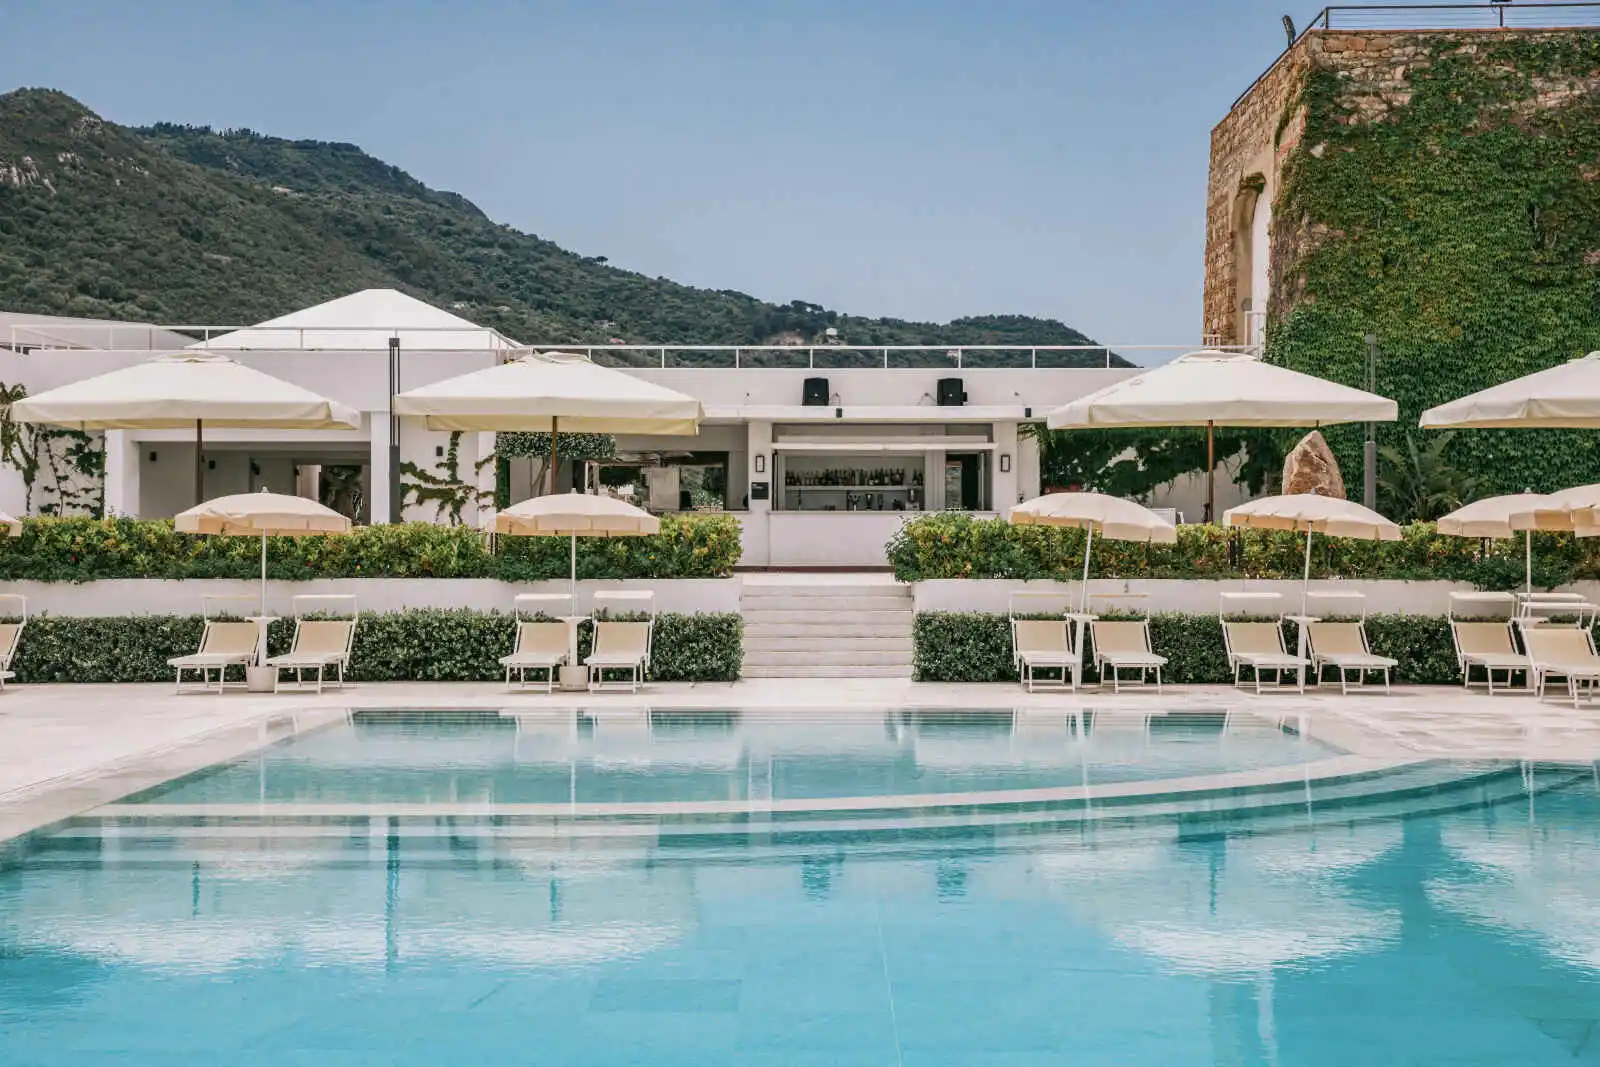 Italie - Sicile - Hôtel Mangia's Pollina Resort 4*